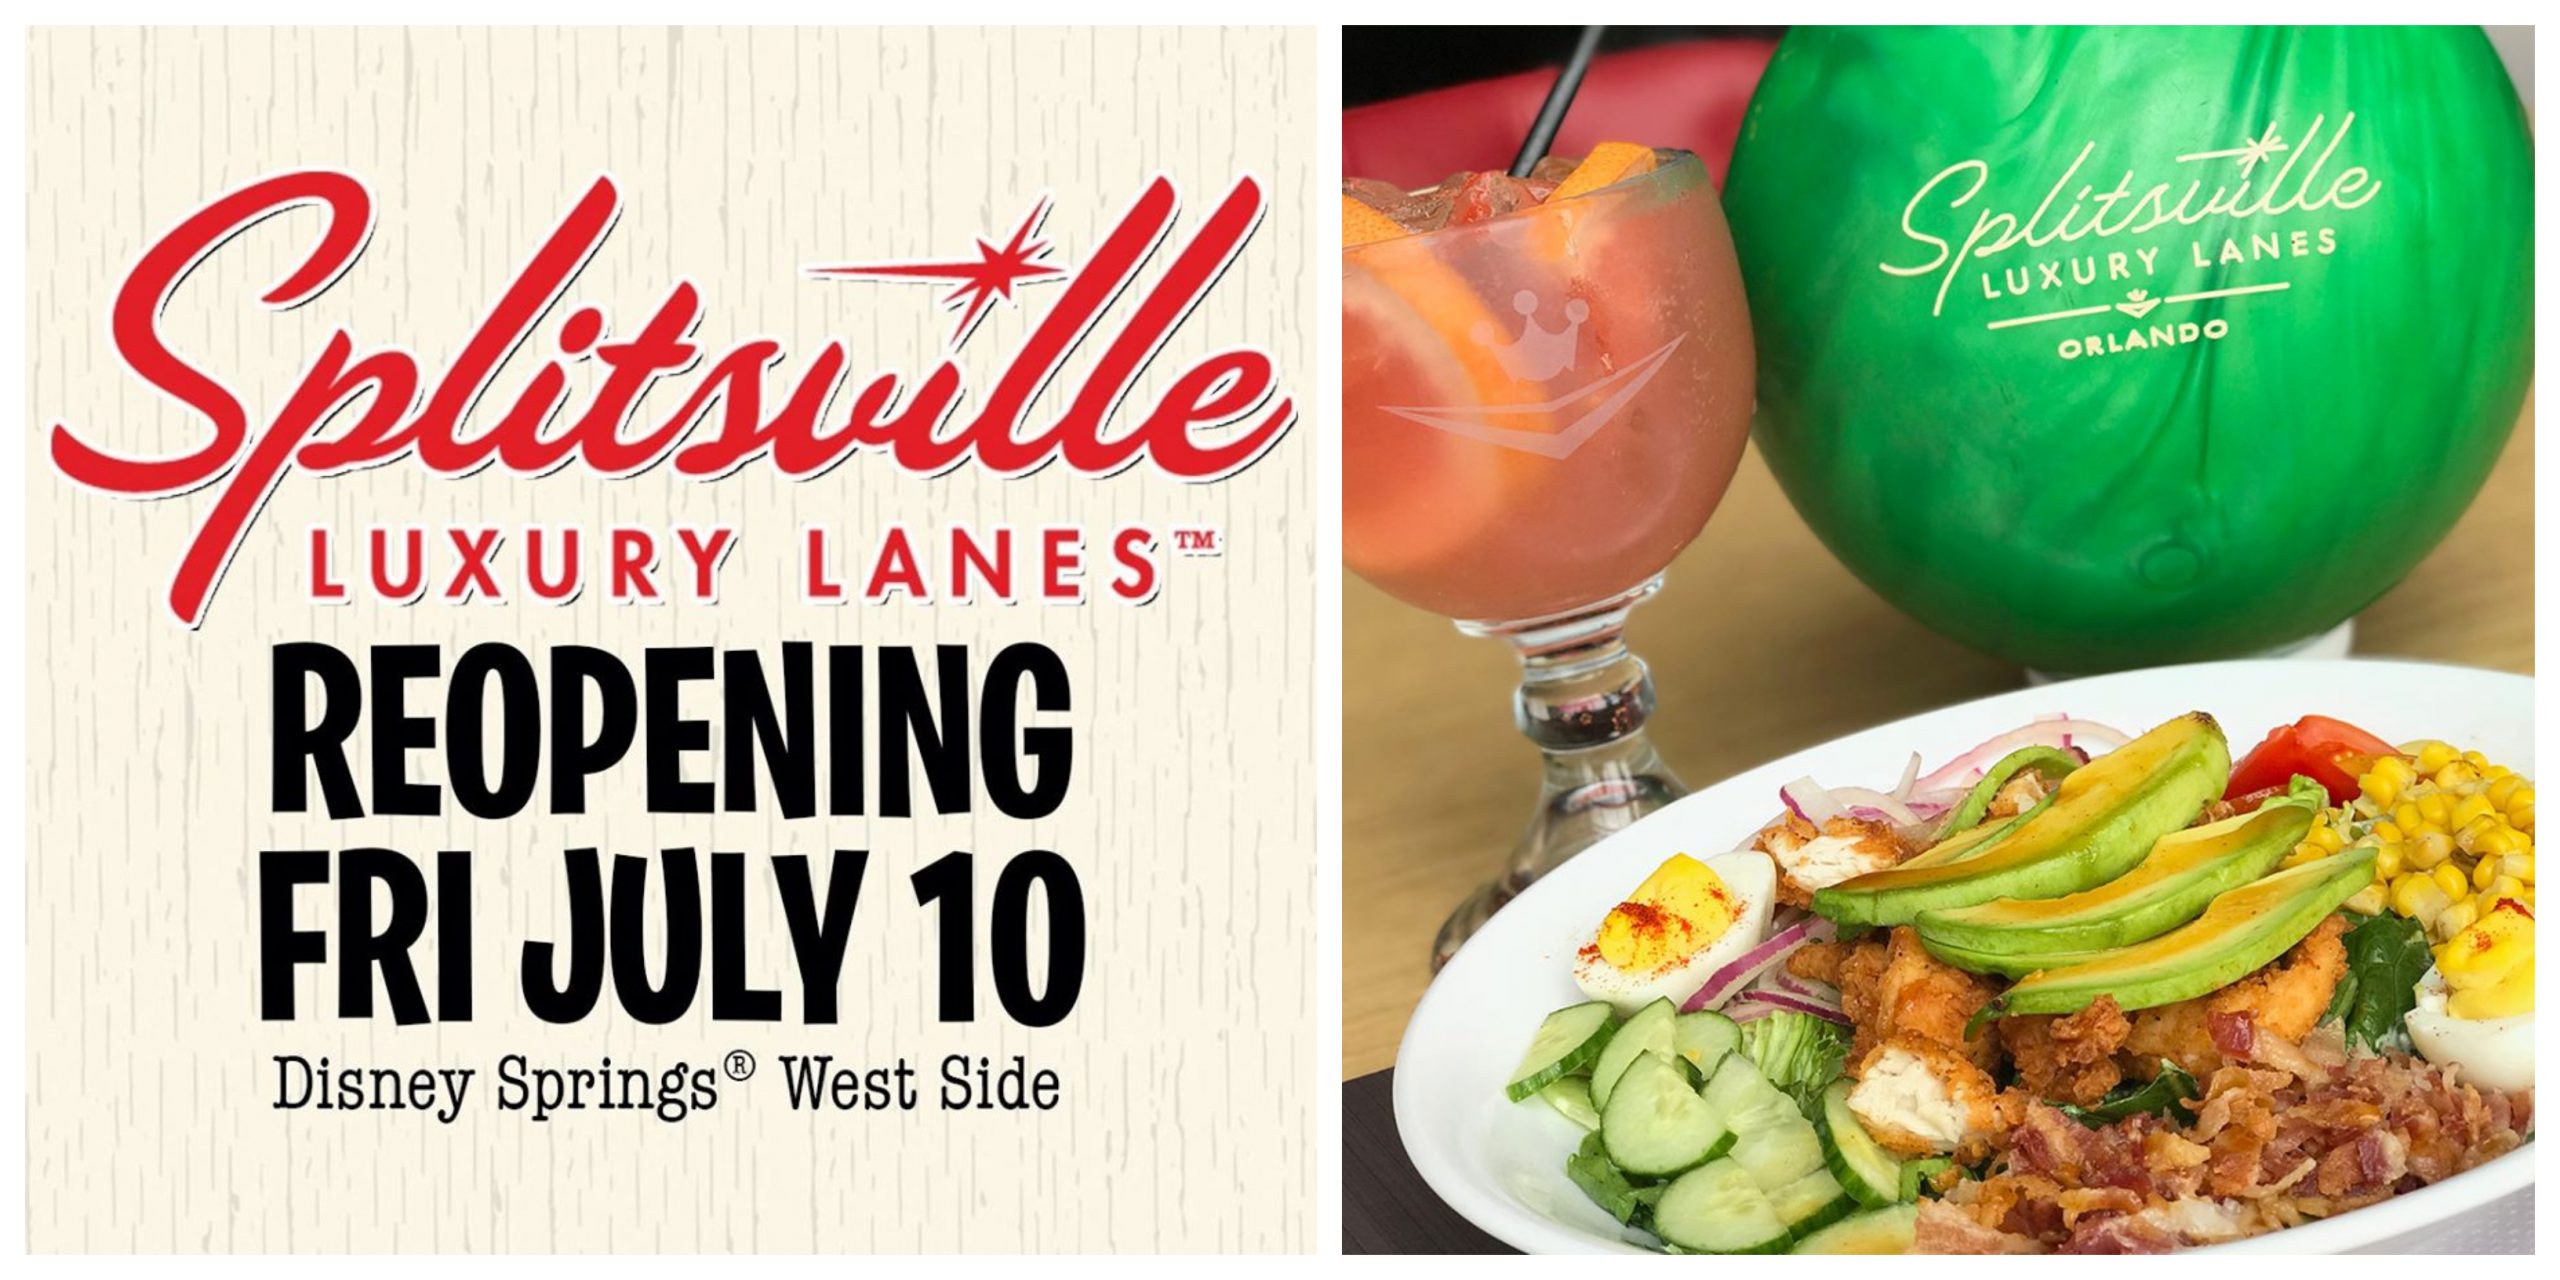 Splitsville in Disney Springs reopening on July 10th